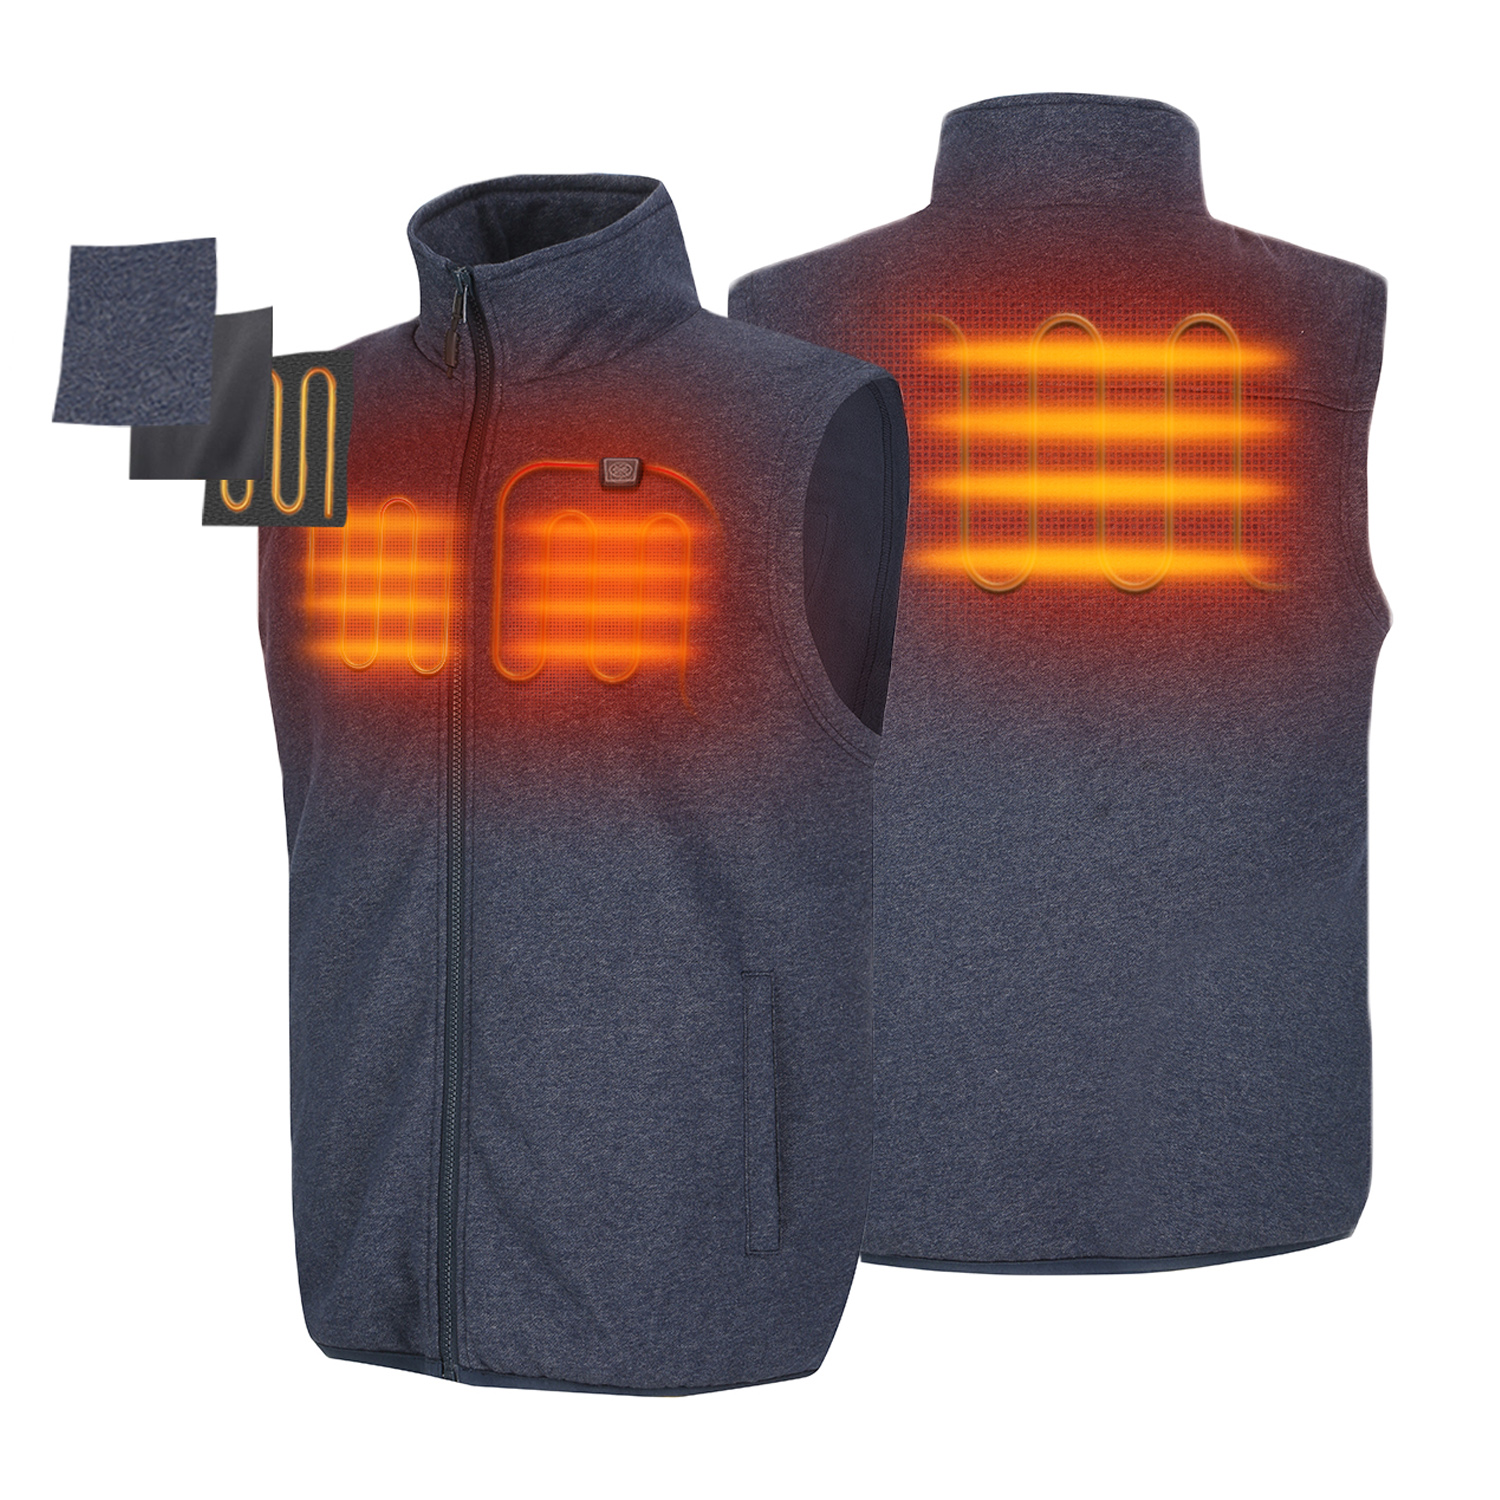 ORORO Men's Fleece Heated Vest with Battery Pack - image 1 of 6